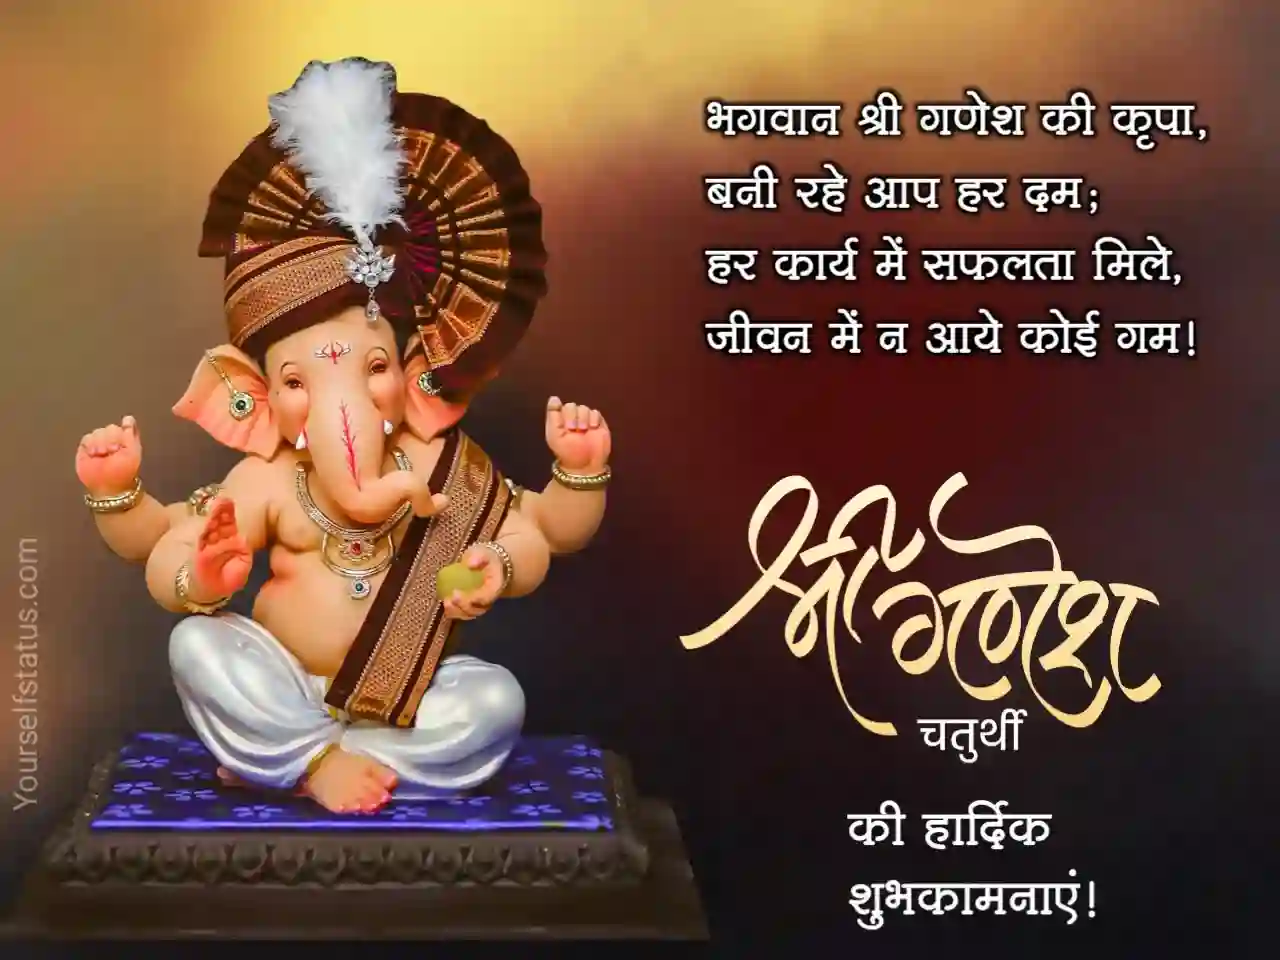 Ganesh chaturthi images in hindi